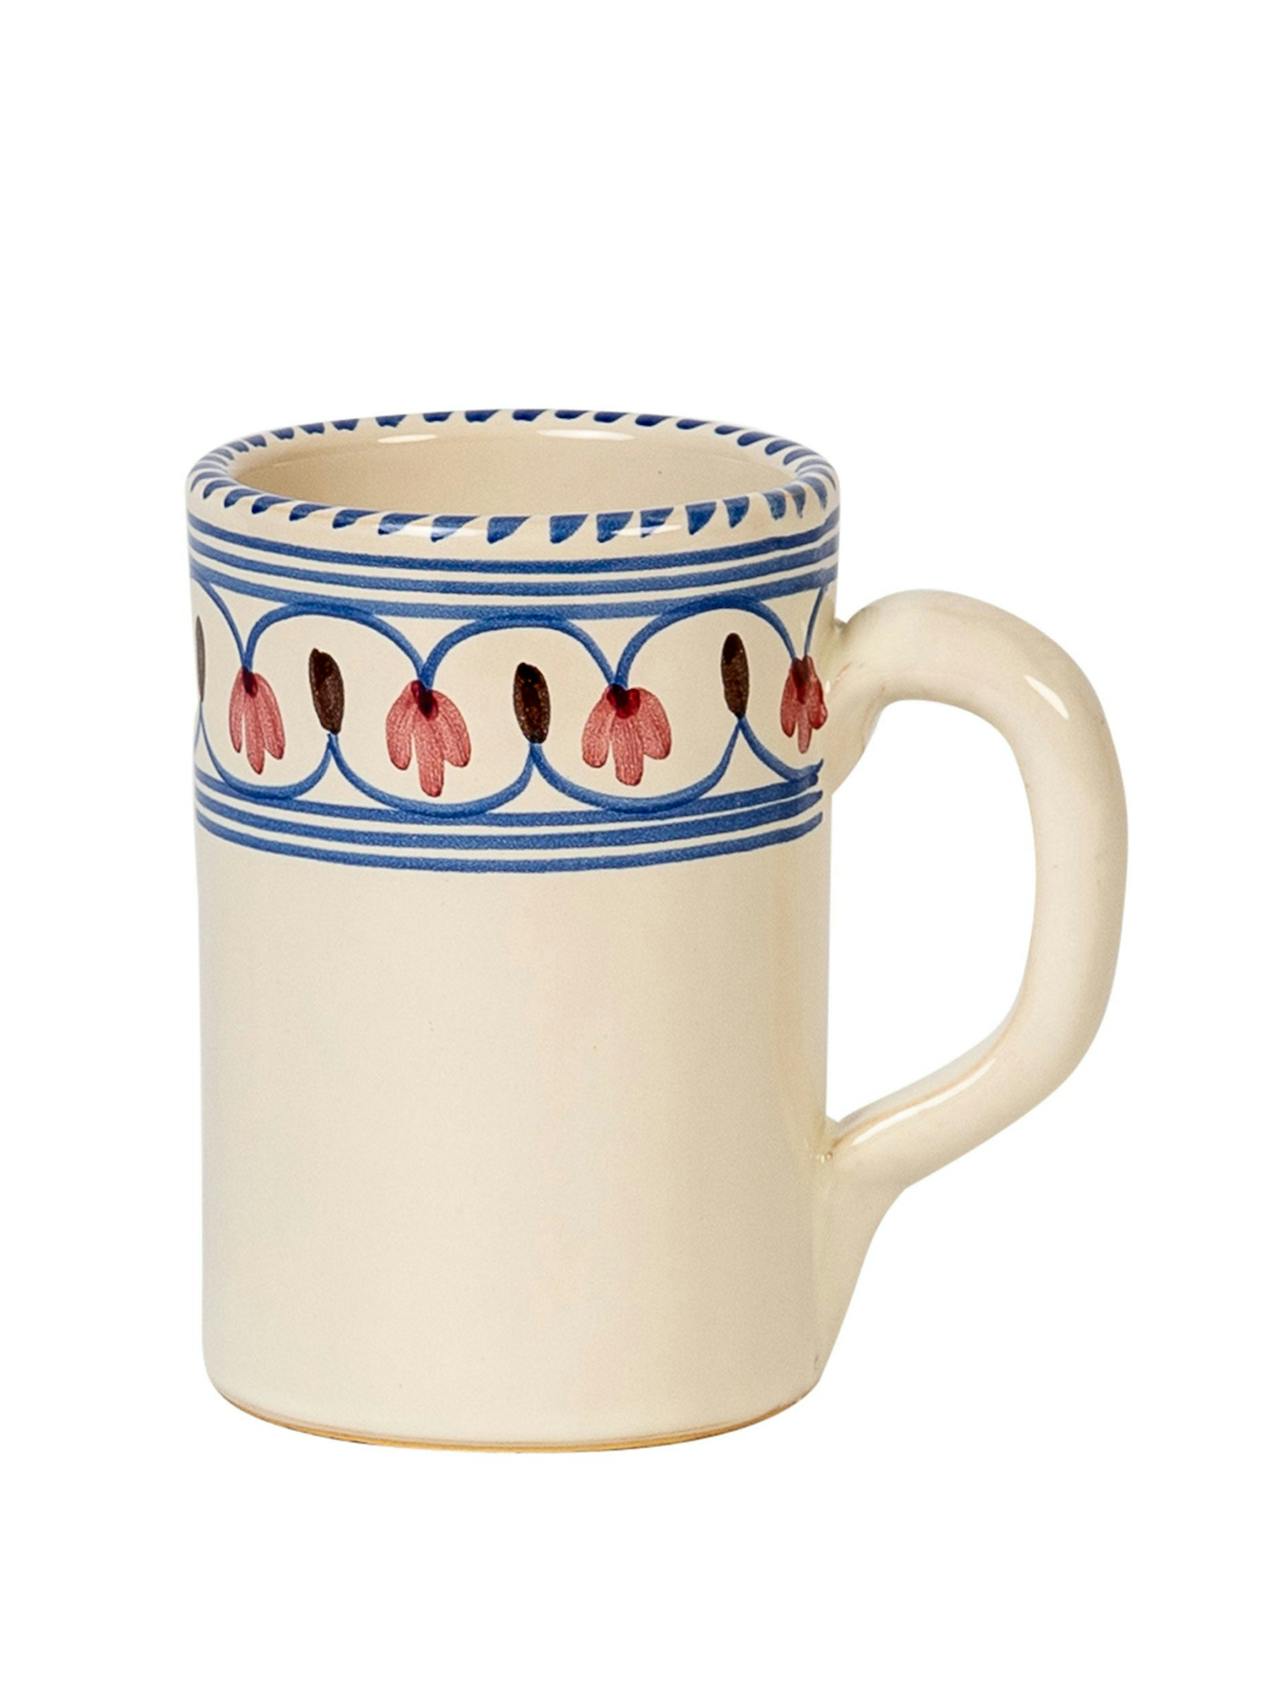 Honor breakfast mug